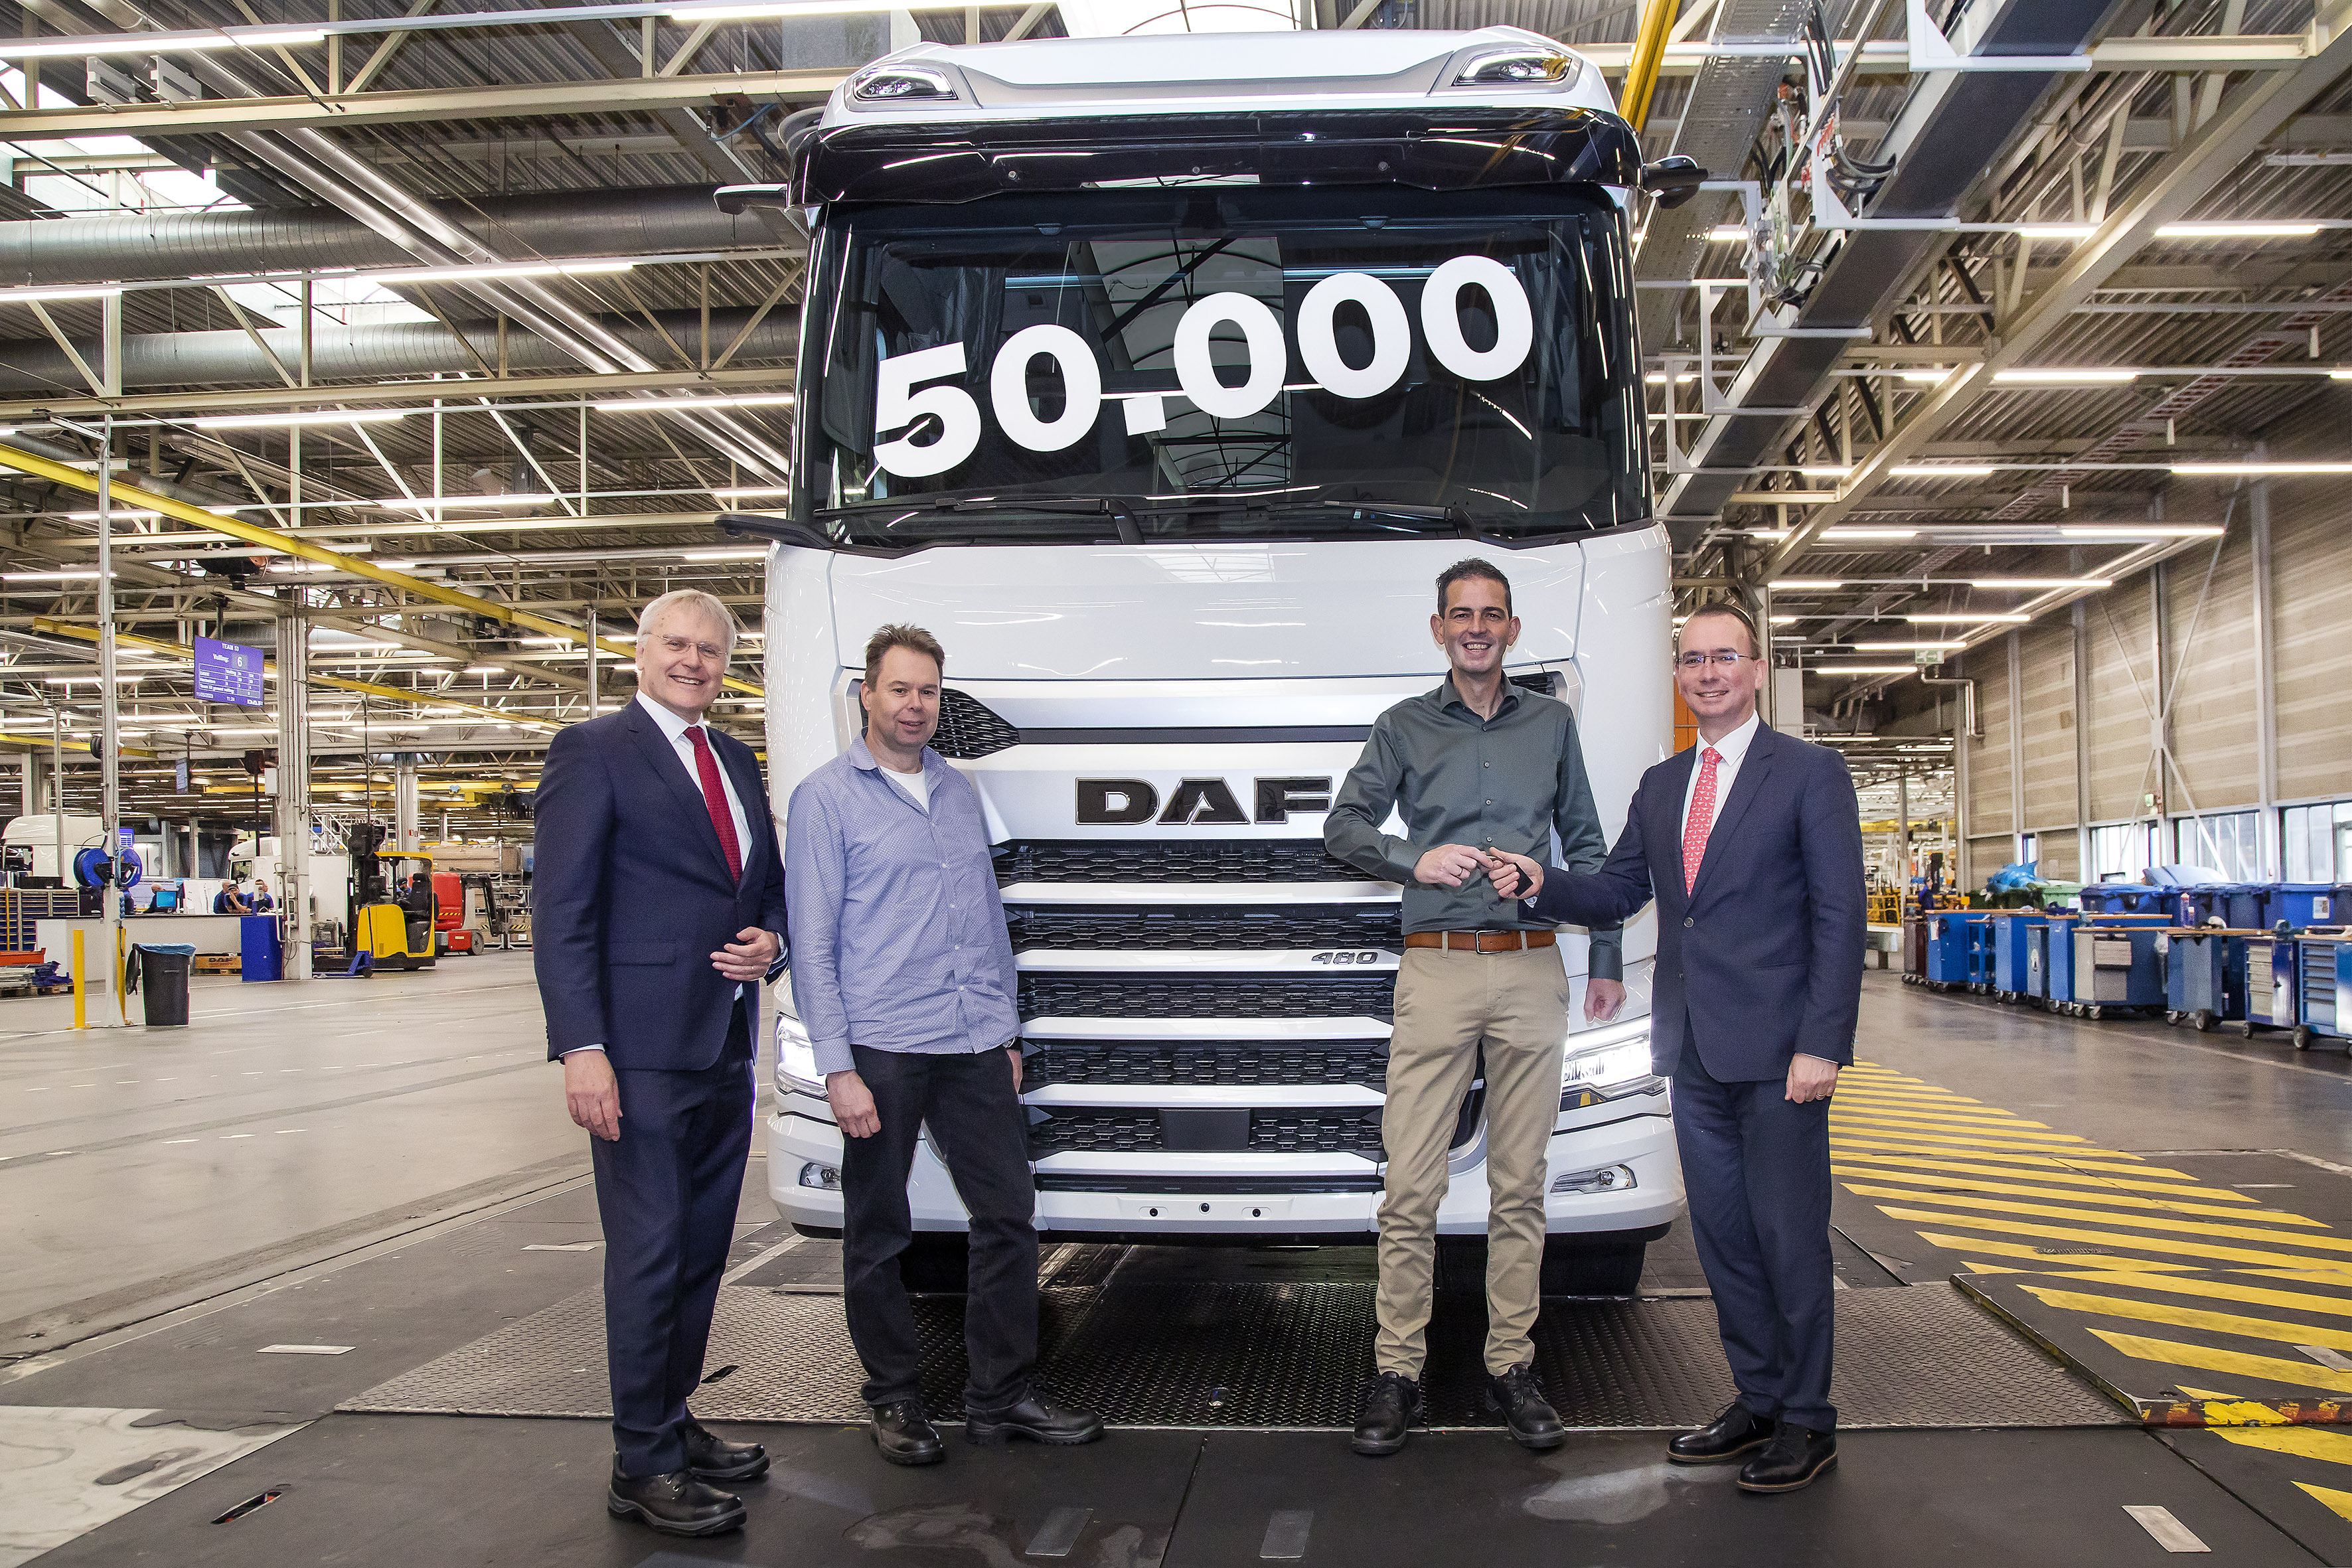 DAF reaches milestone of 50,000 New Generation trucks - DAF Trucks N.V.